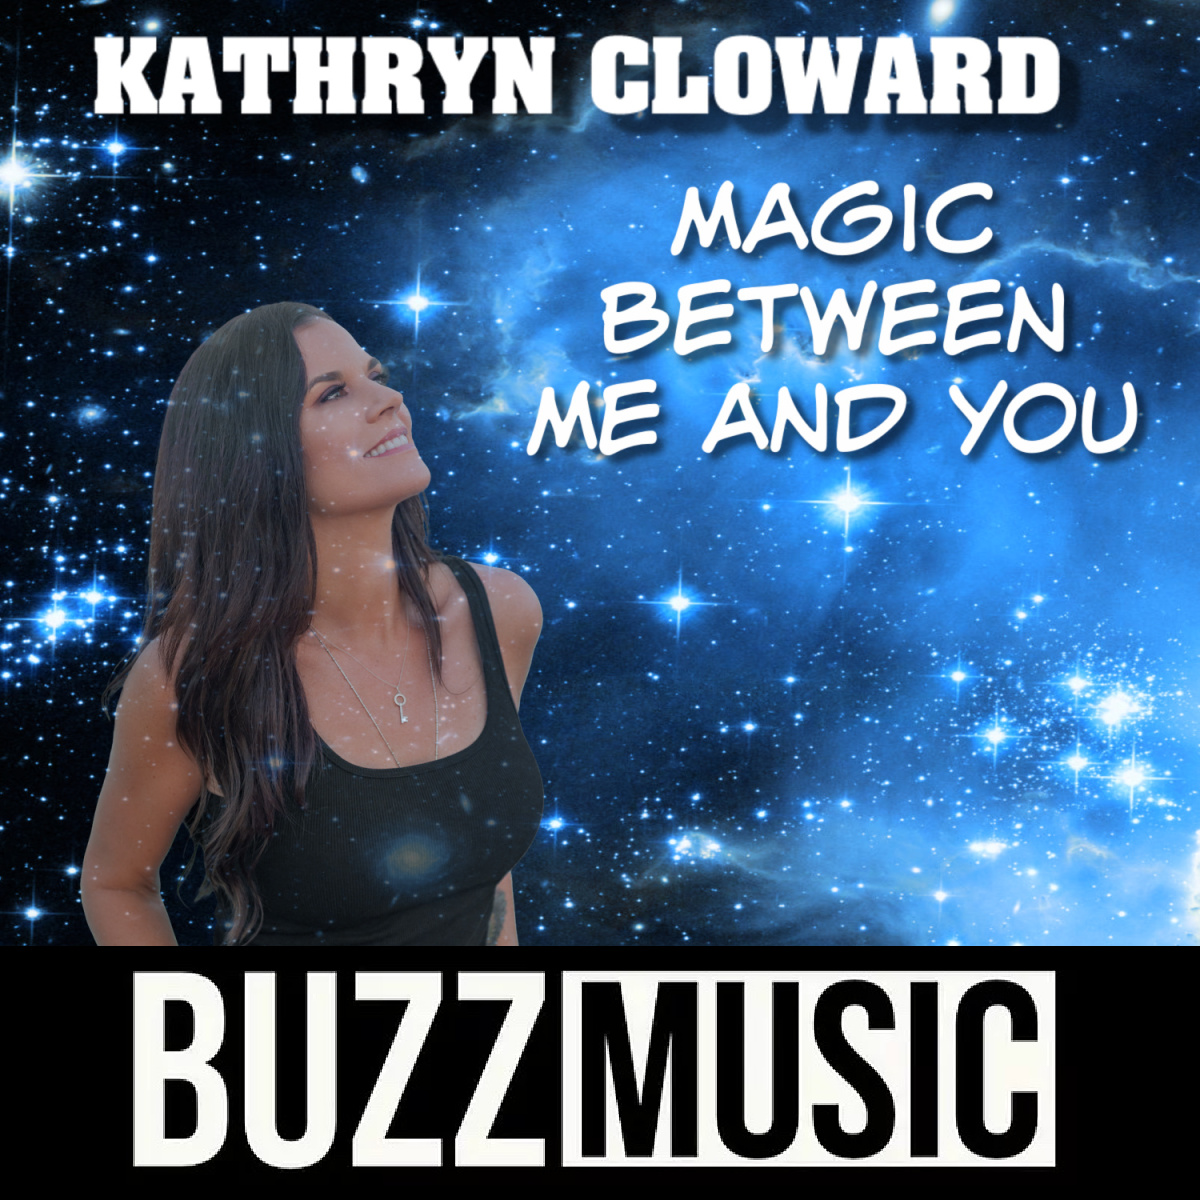 Kathryn Cloward Magic Between Me and You Buzz Music